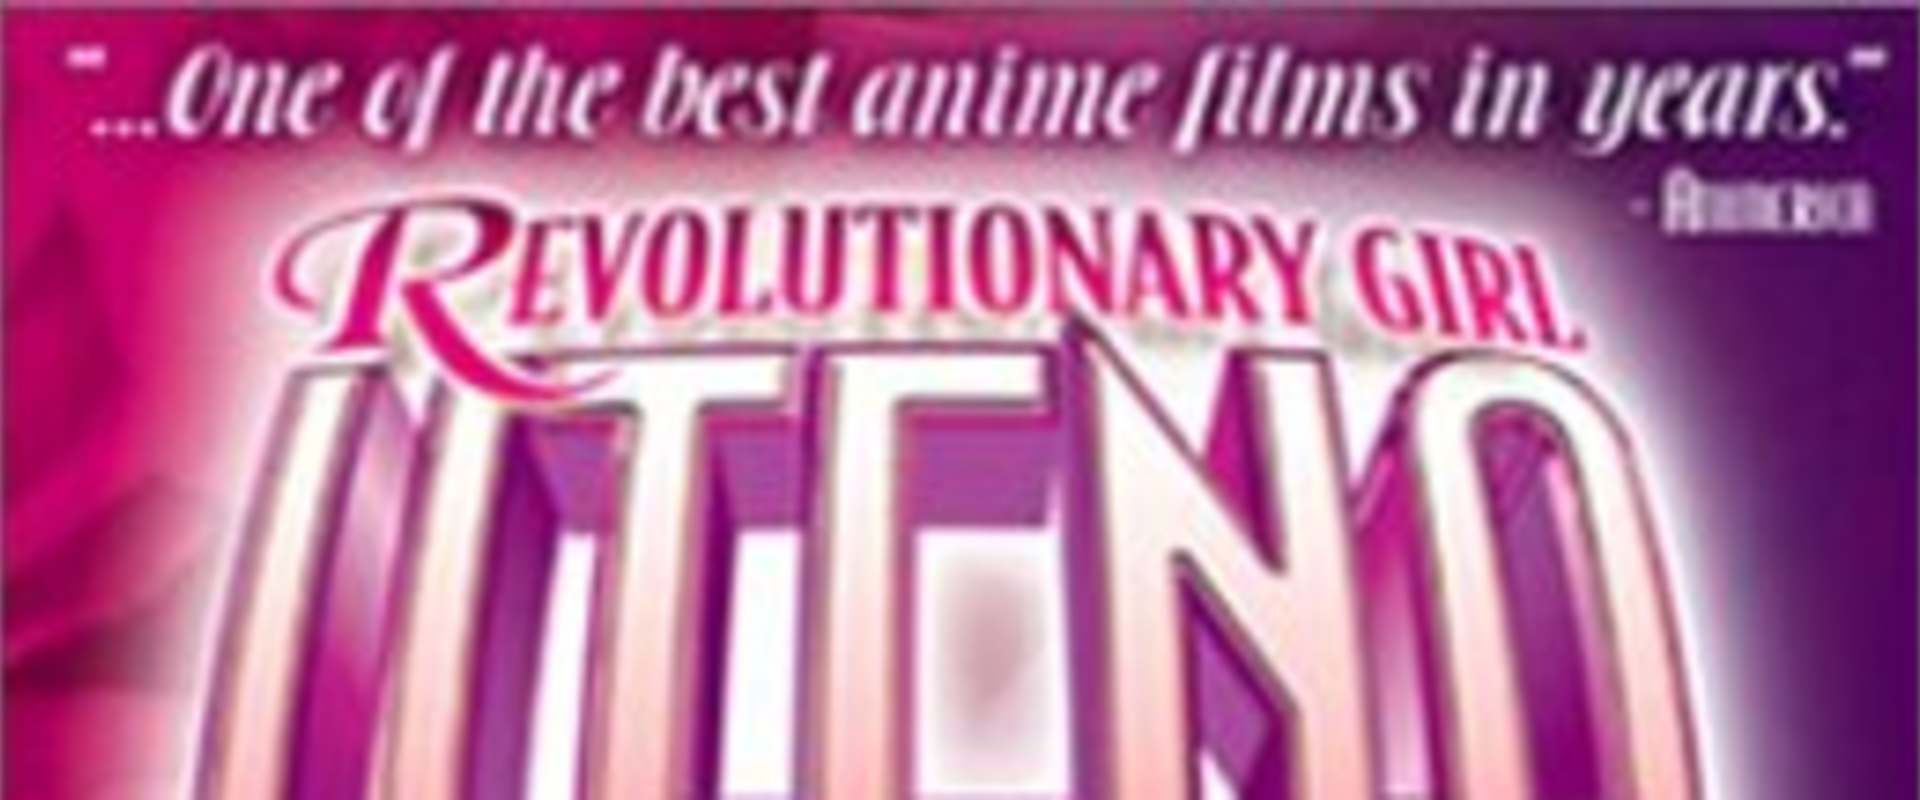 Revolutionary Girl Utena: The Movie background 2